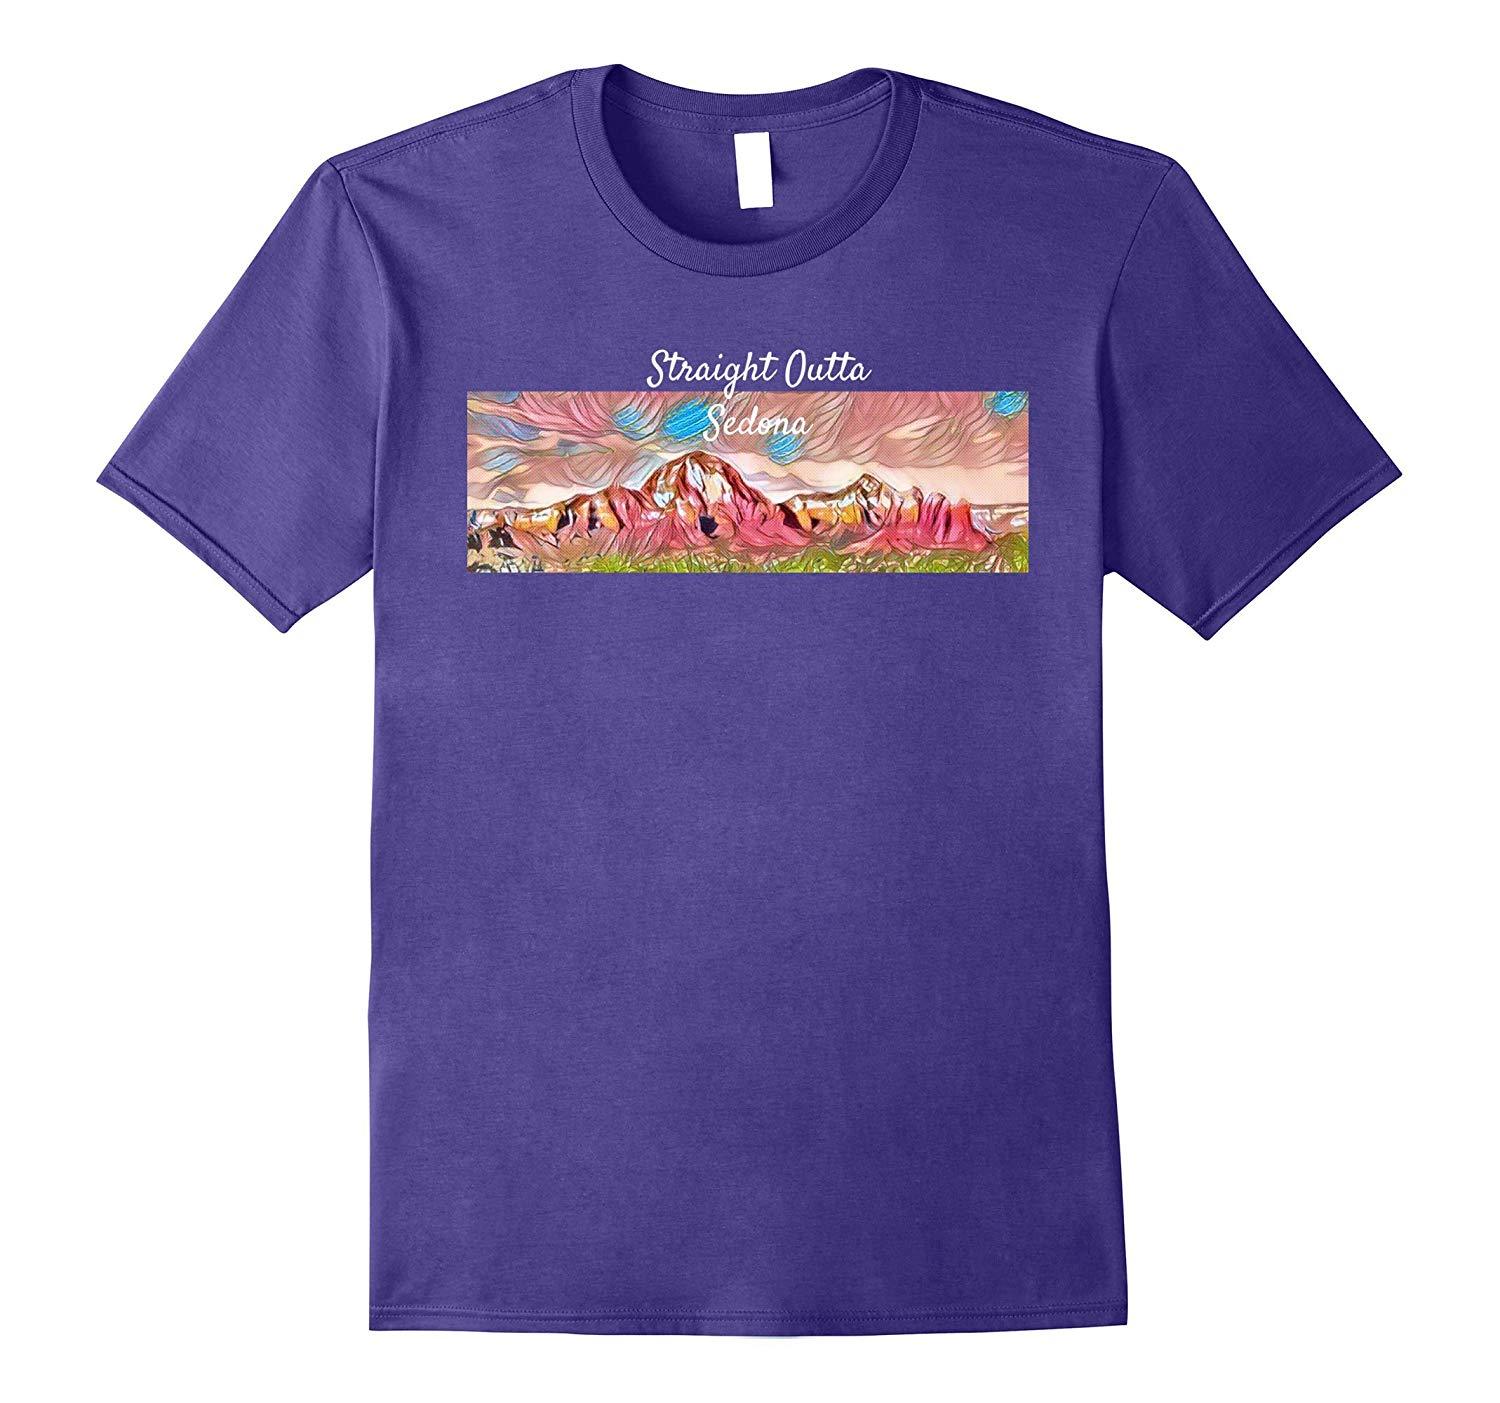 New Shirts - Straight Outta Sedona T-shirt Az Red Rocks Lover Men - $19.95 - $23.95